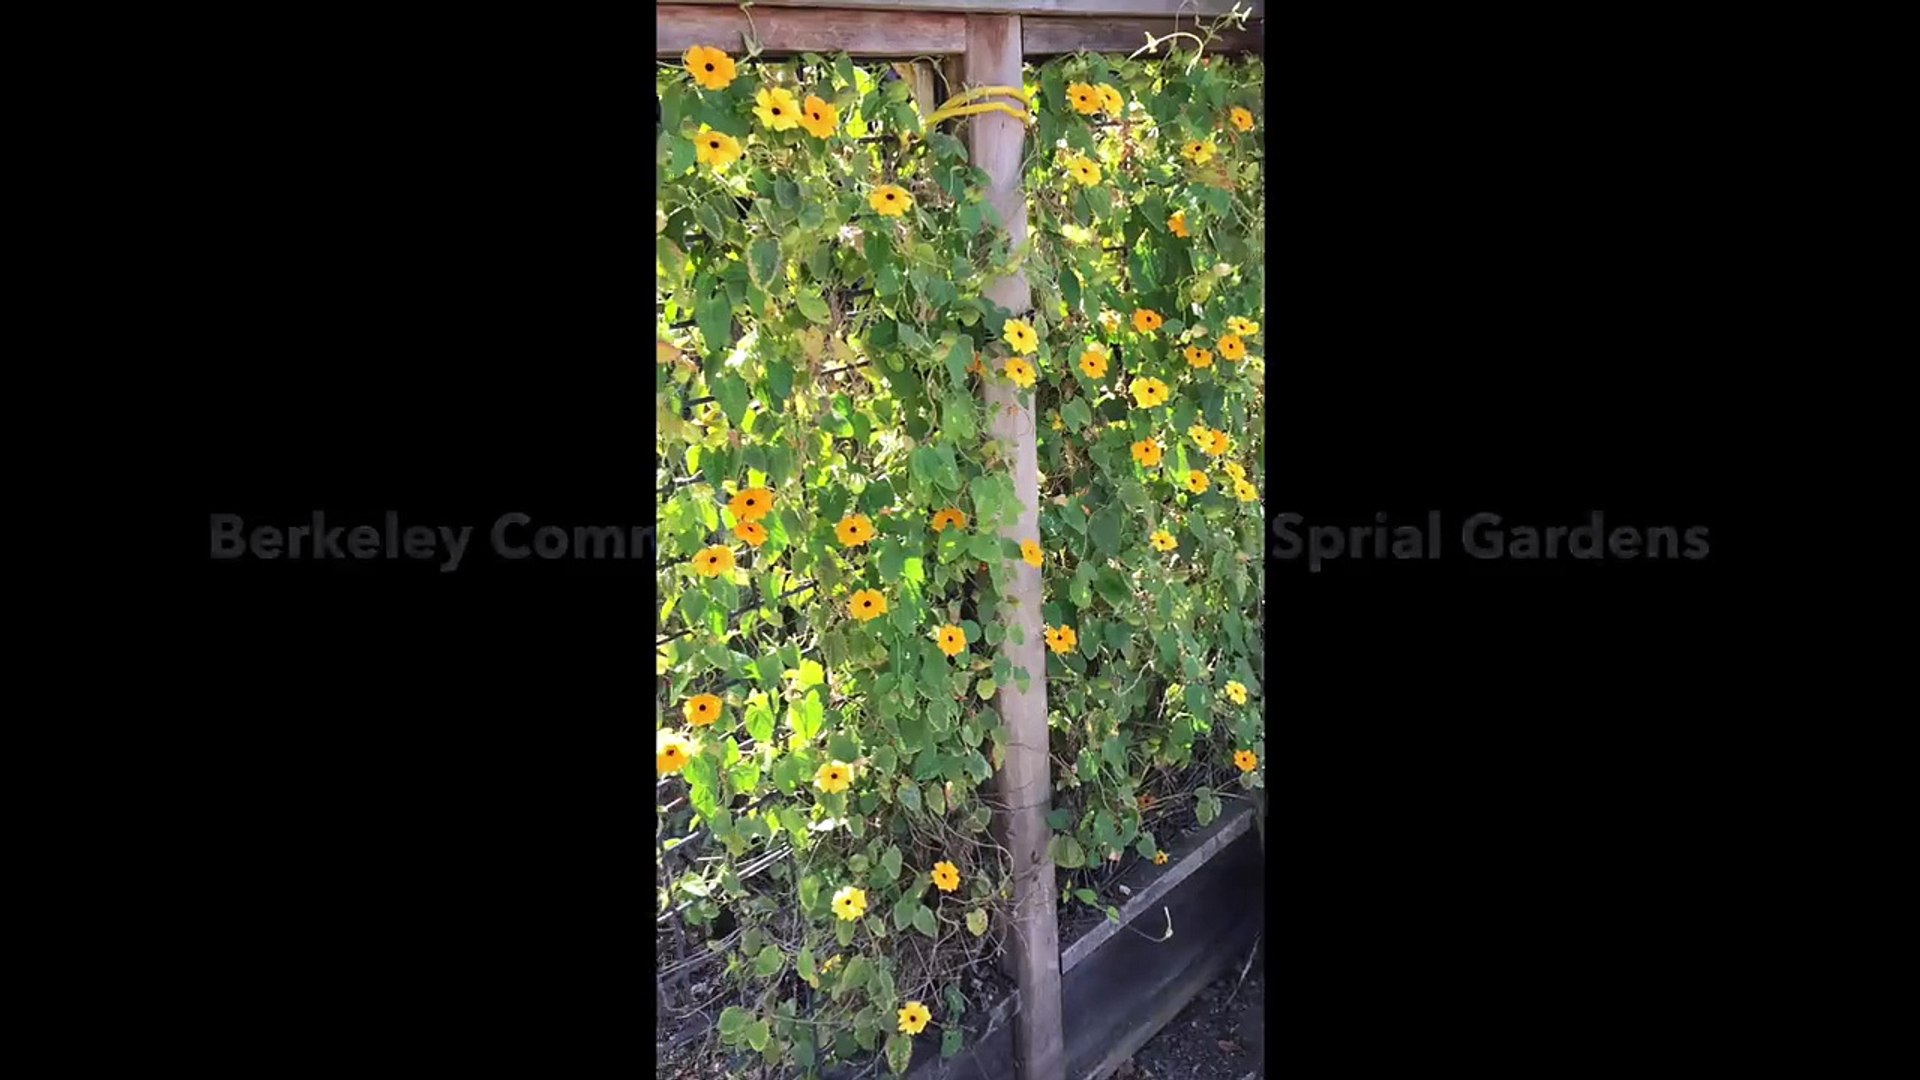 Berkeley Community Garden: Spiral Garden Vlog